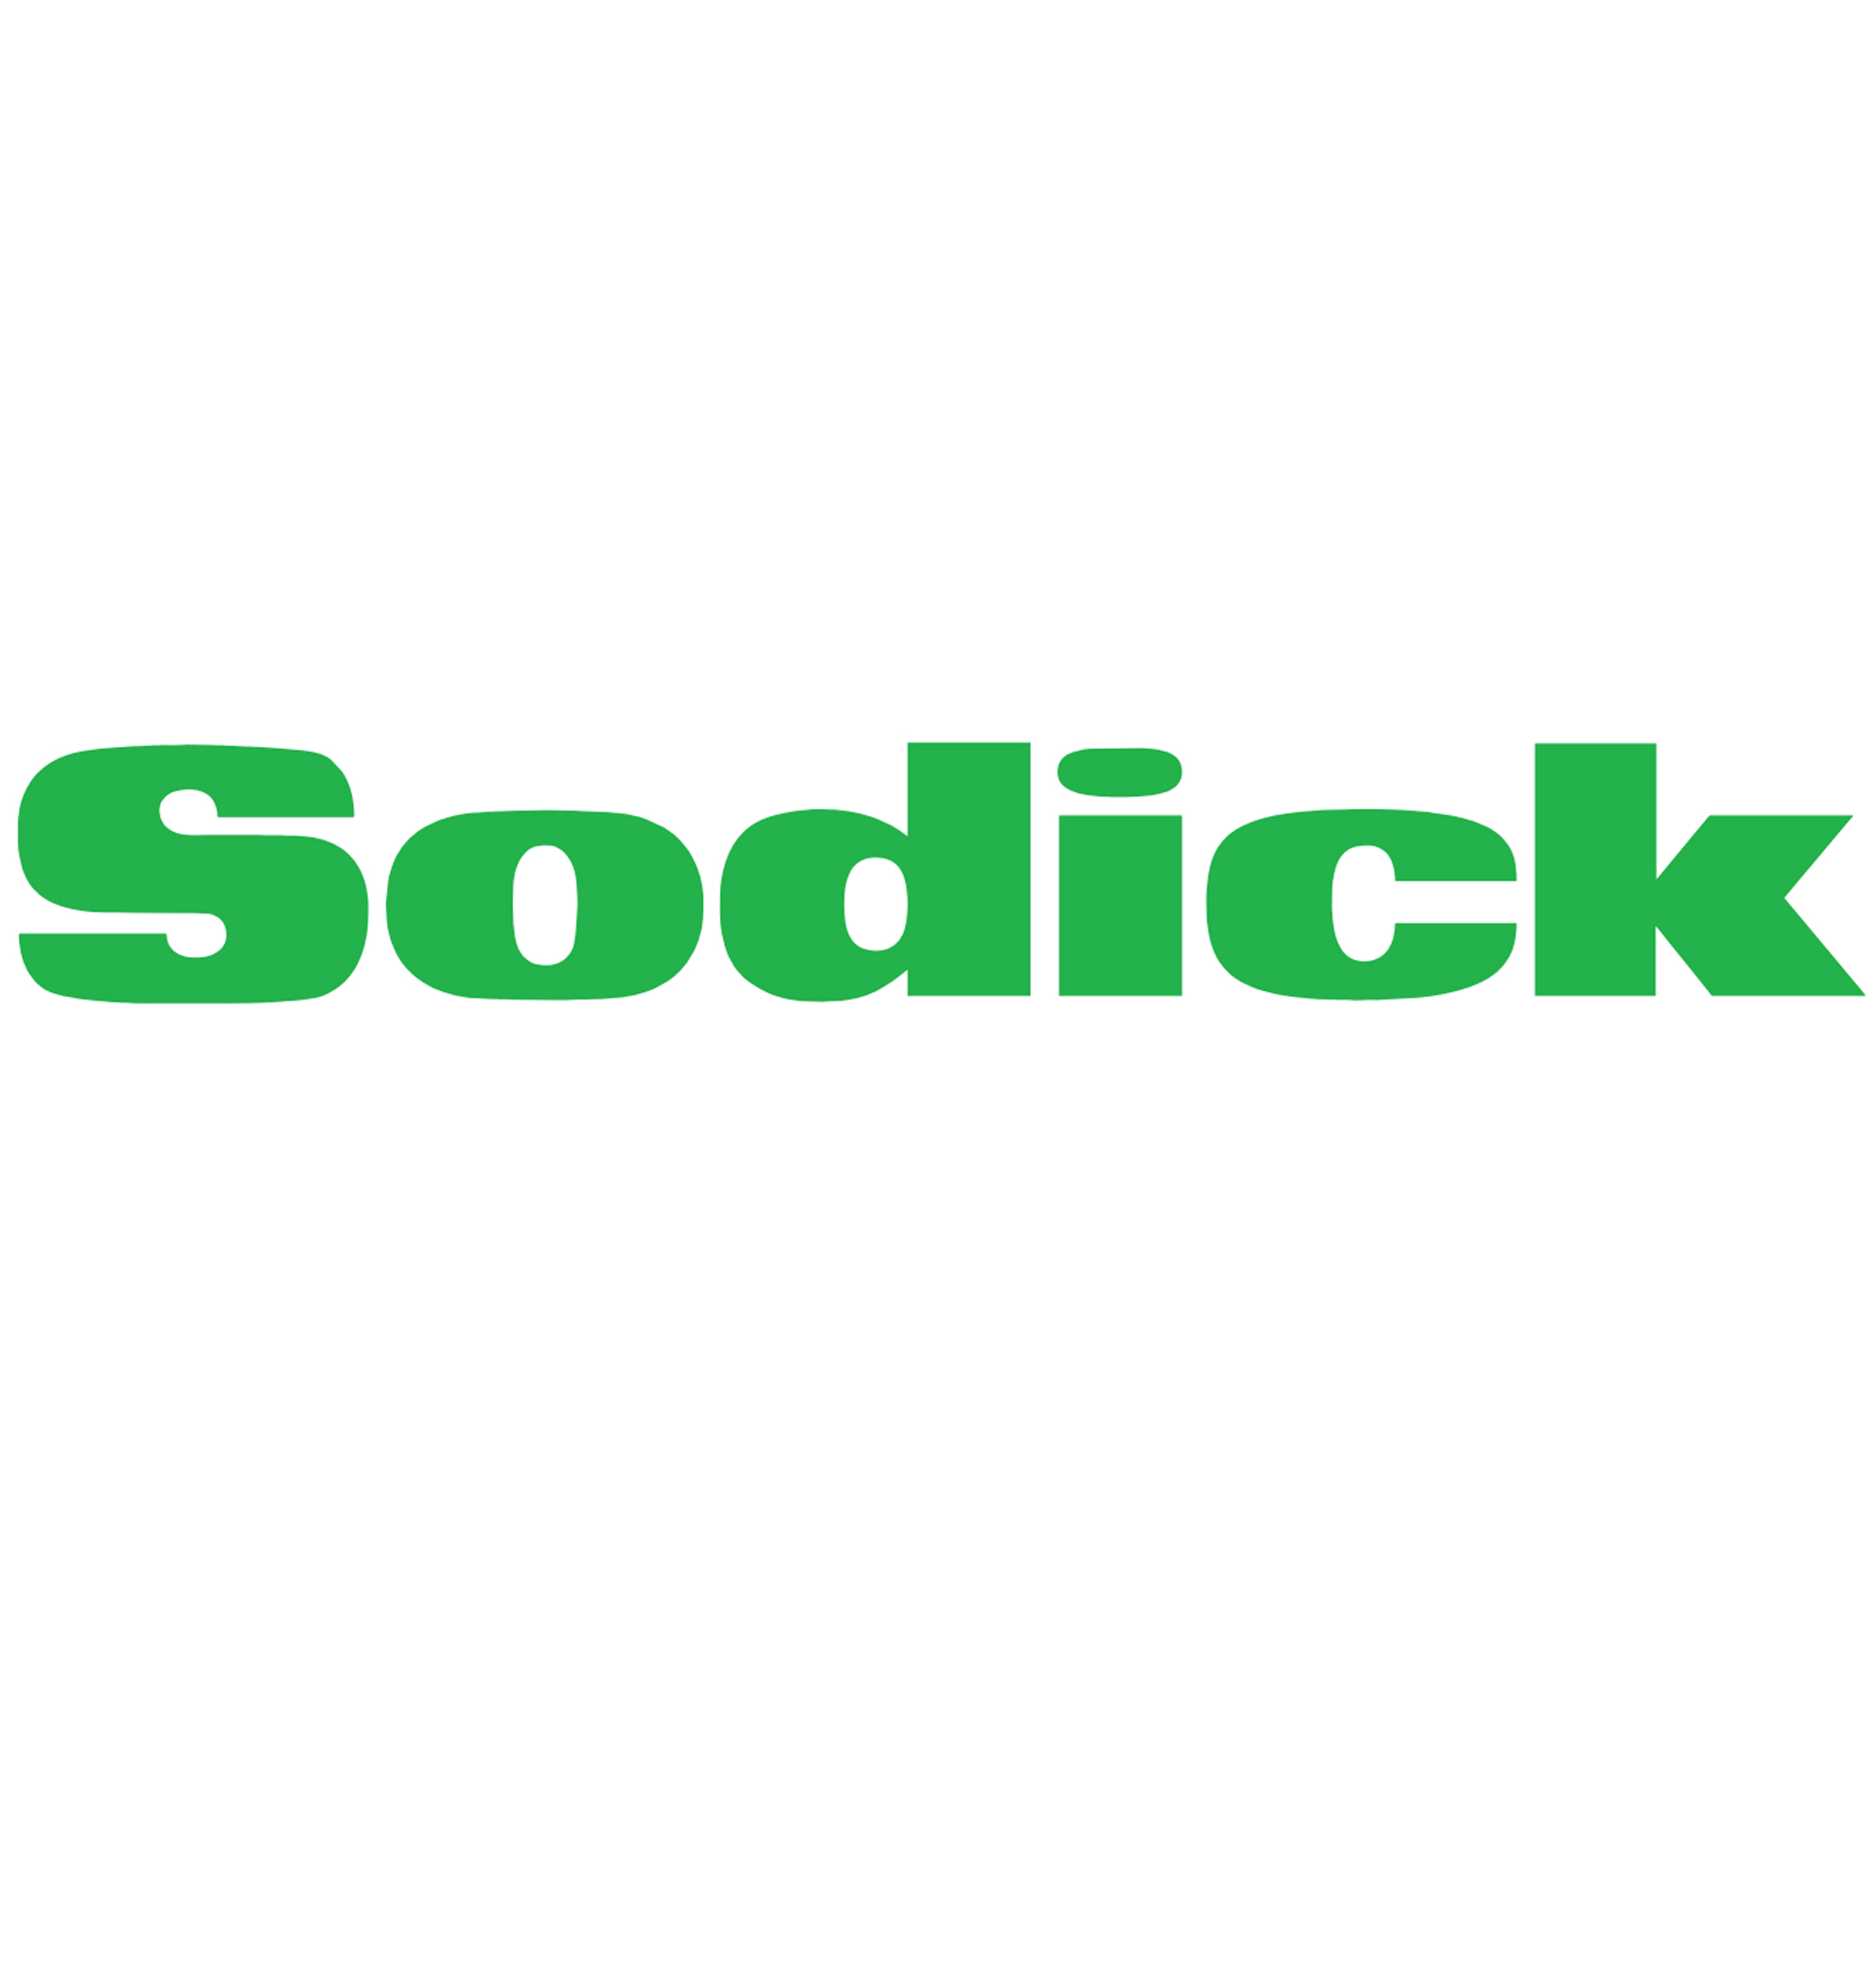 Sodick product catalog